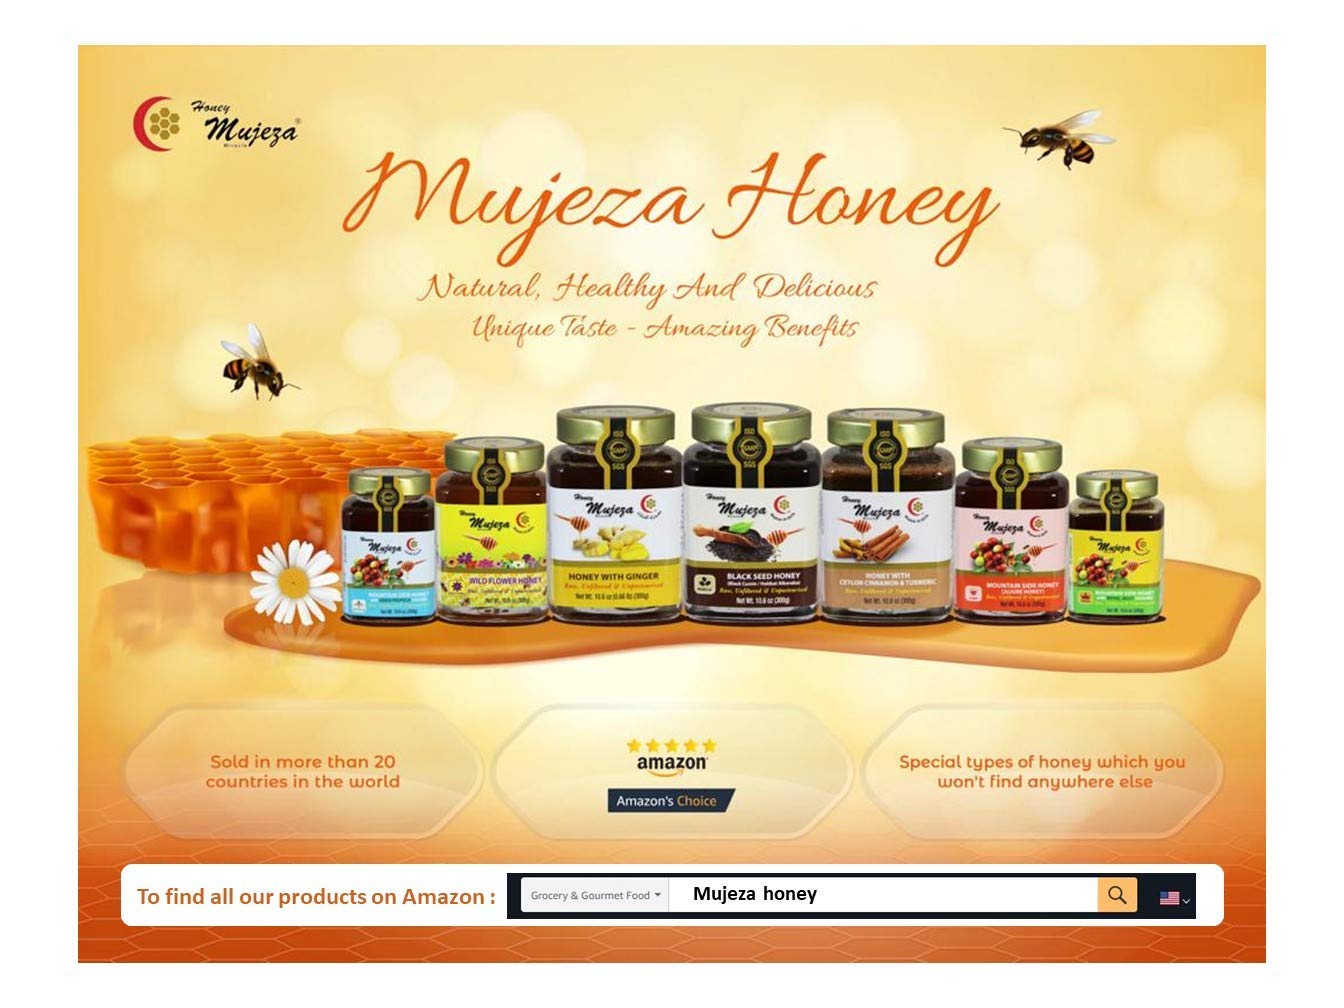 Mujeza Authentic Mountain Sidr Honey (Jujube) with Fresh Royal Jelly, Equal to Manuka Effectiveness - Gluten Free 100% Natural Raw Liquid Honey (SAVE $11 ON BIGGER SIZE) (250g / 8.8oz) - Mujeza Al Shifa